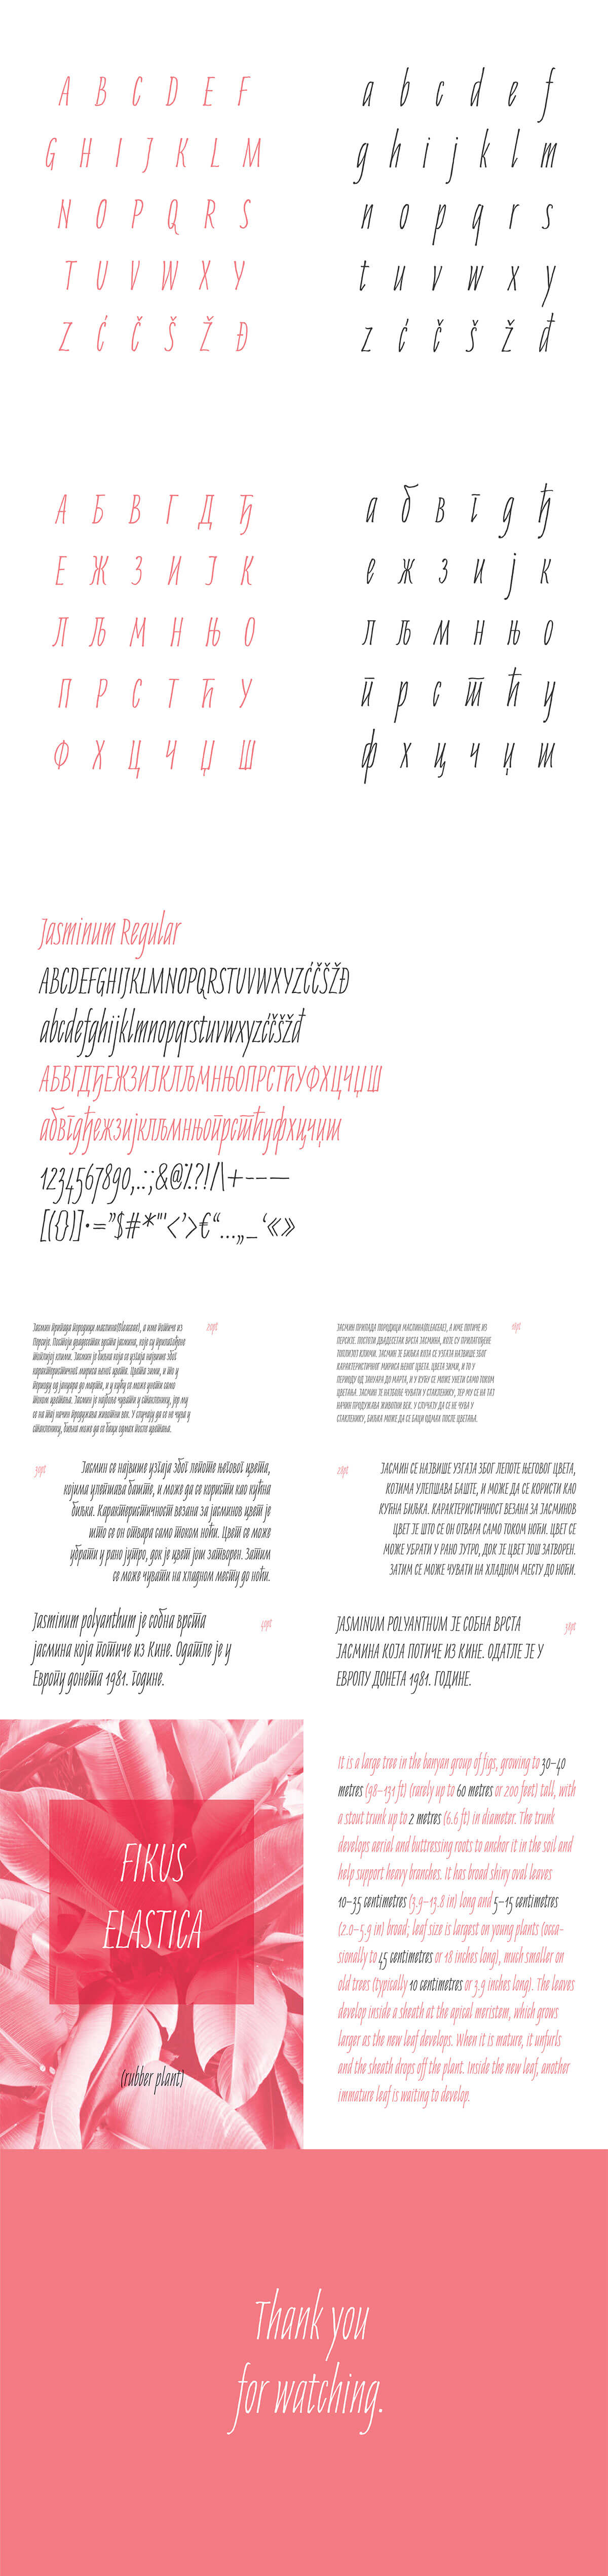 Free Jasminum Handwriting Font